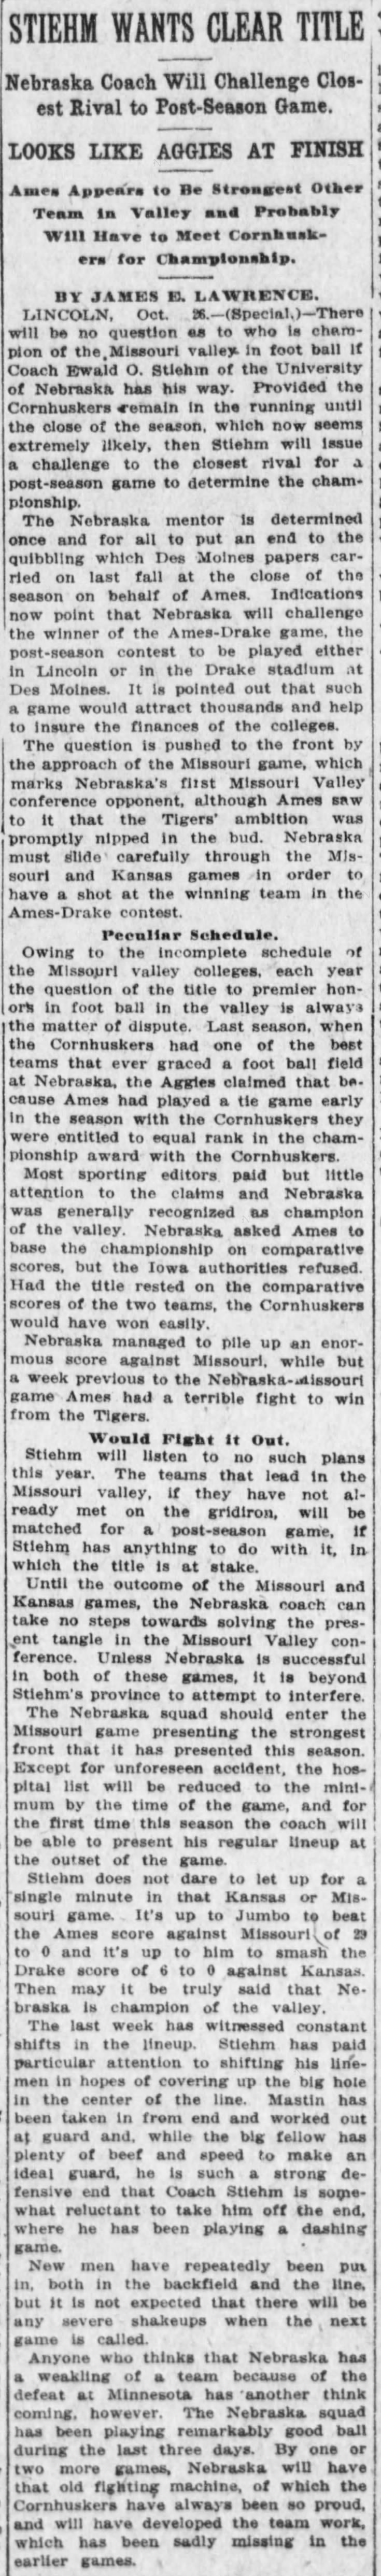 1912 Stiehm wants clear title, postseason game